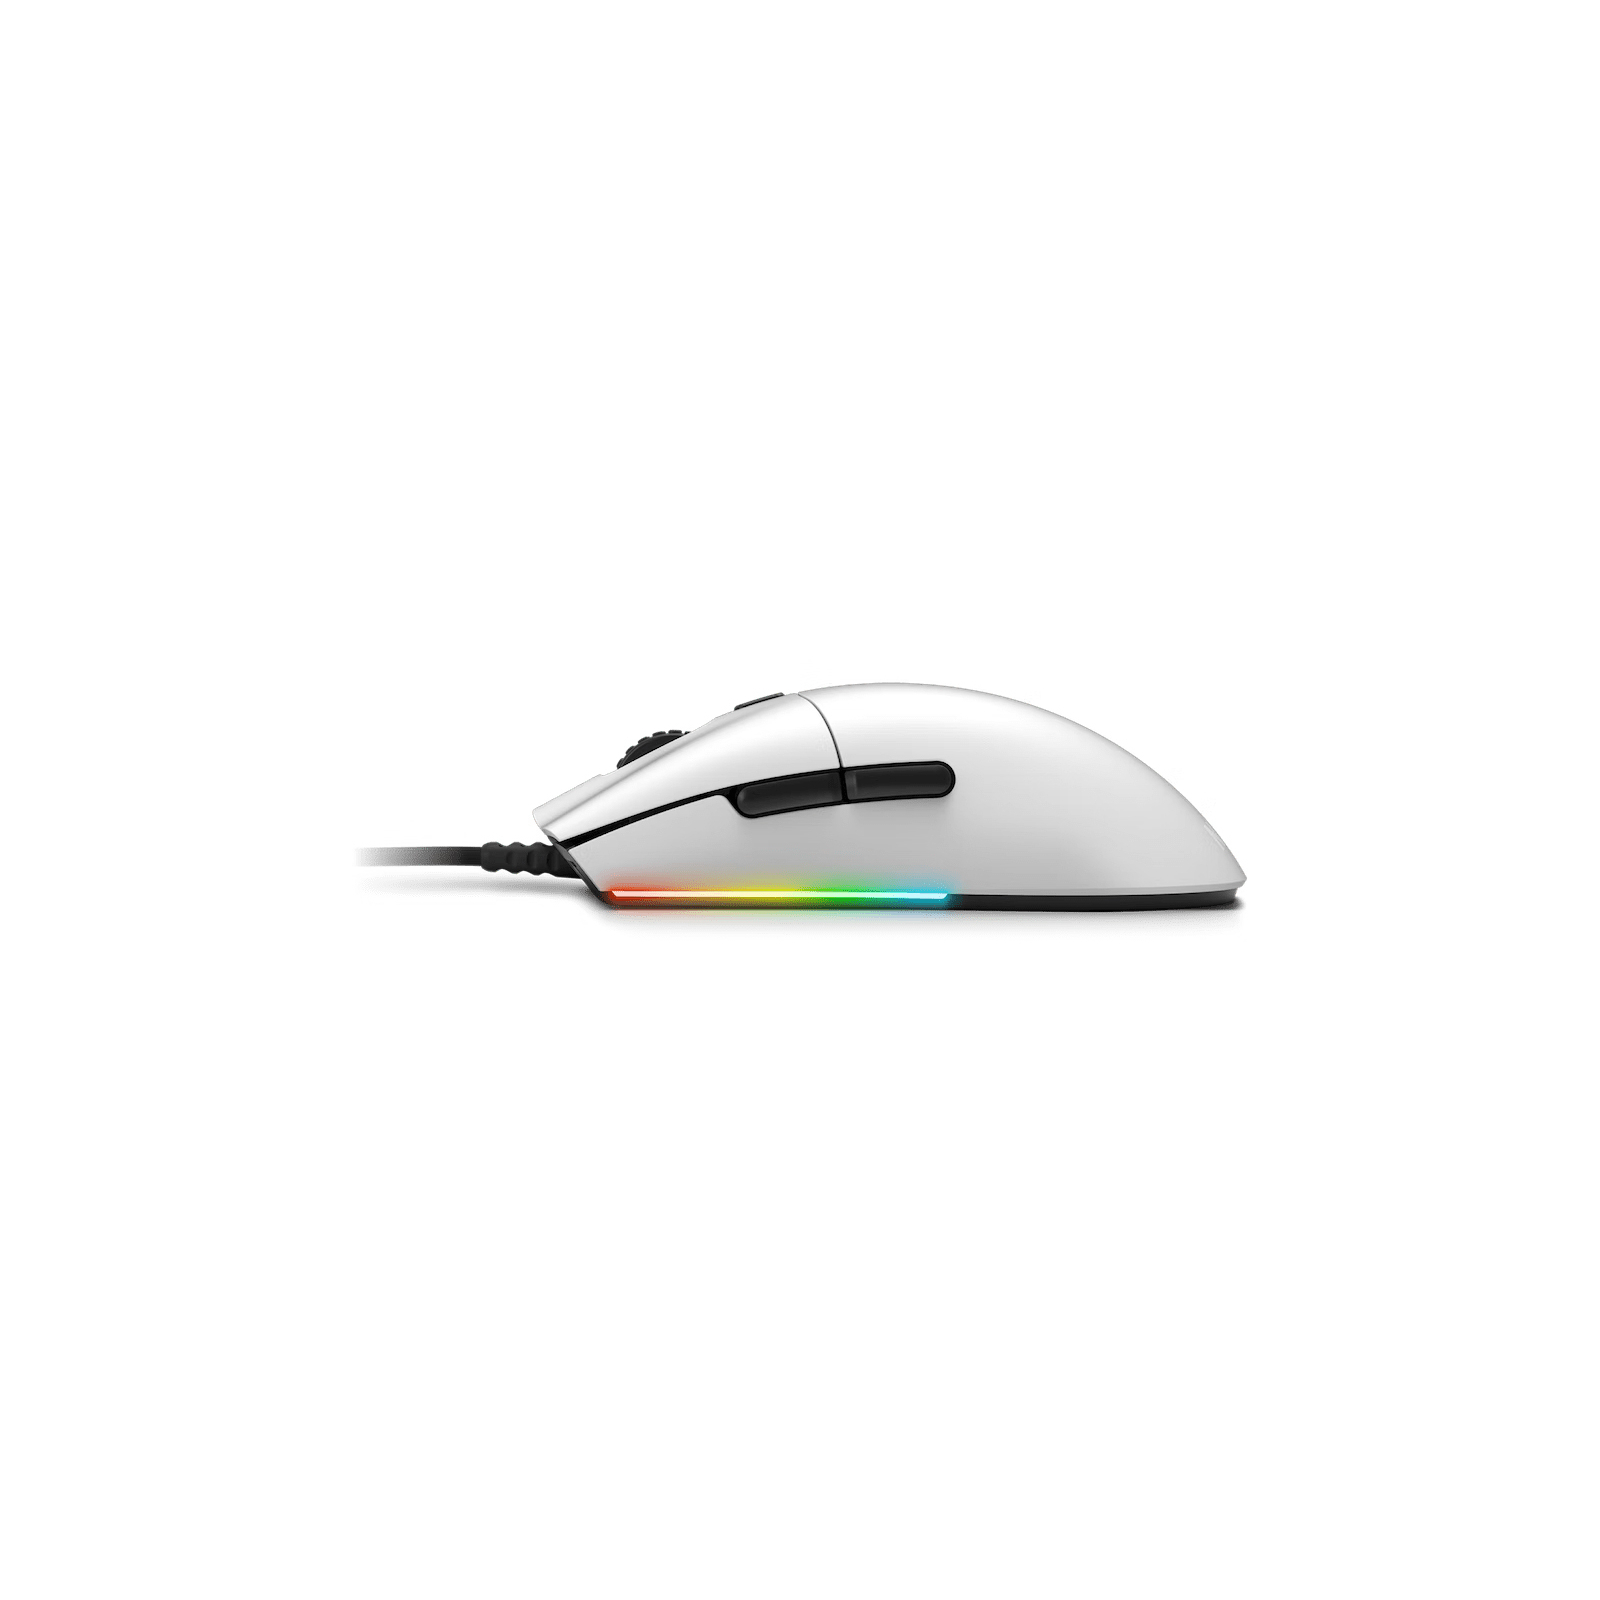 Мышка NZXT LIFT Wired Mouse Ambidextrous USB White (MS-1WRAX-WM) изображение 5